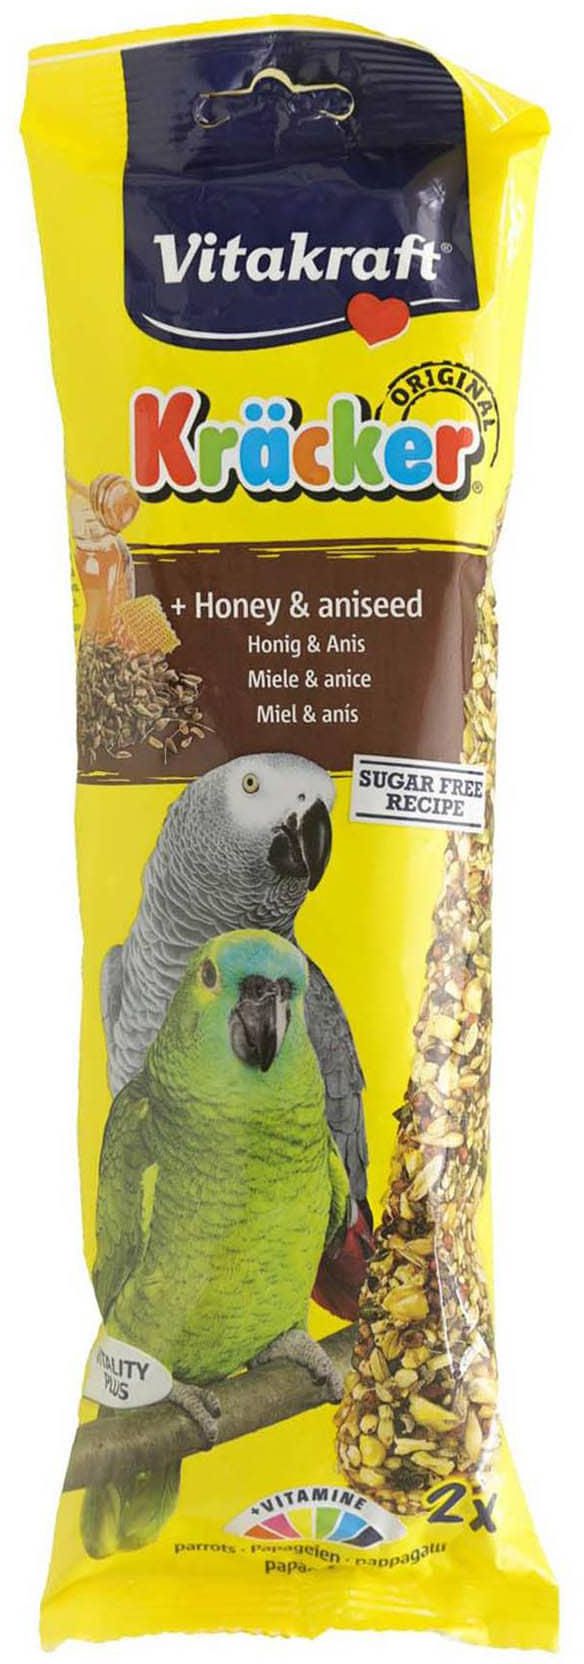 Vitakraft Kracker With Honey And Aniseed For Parrot 180g